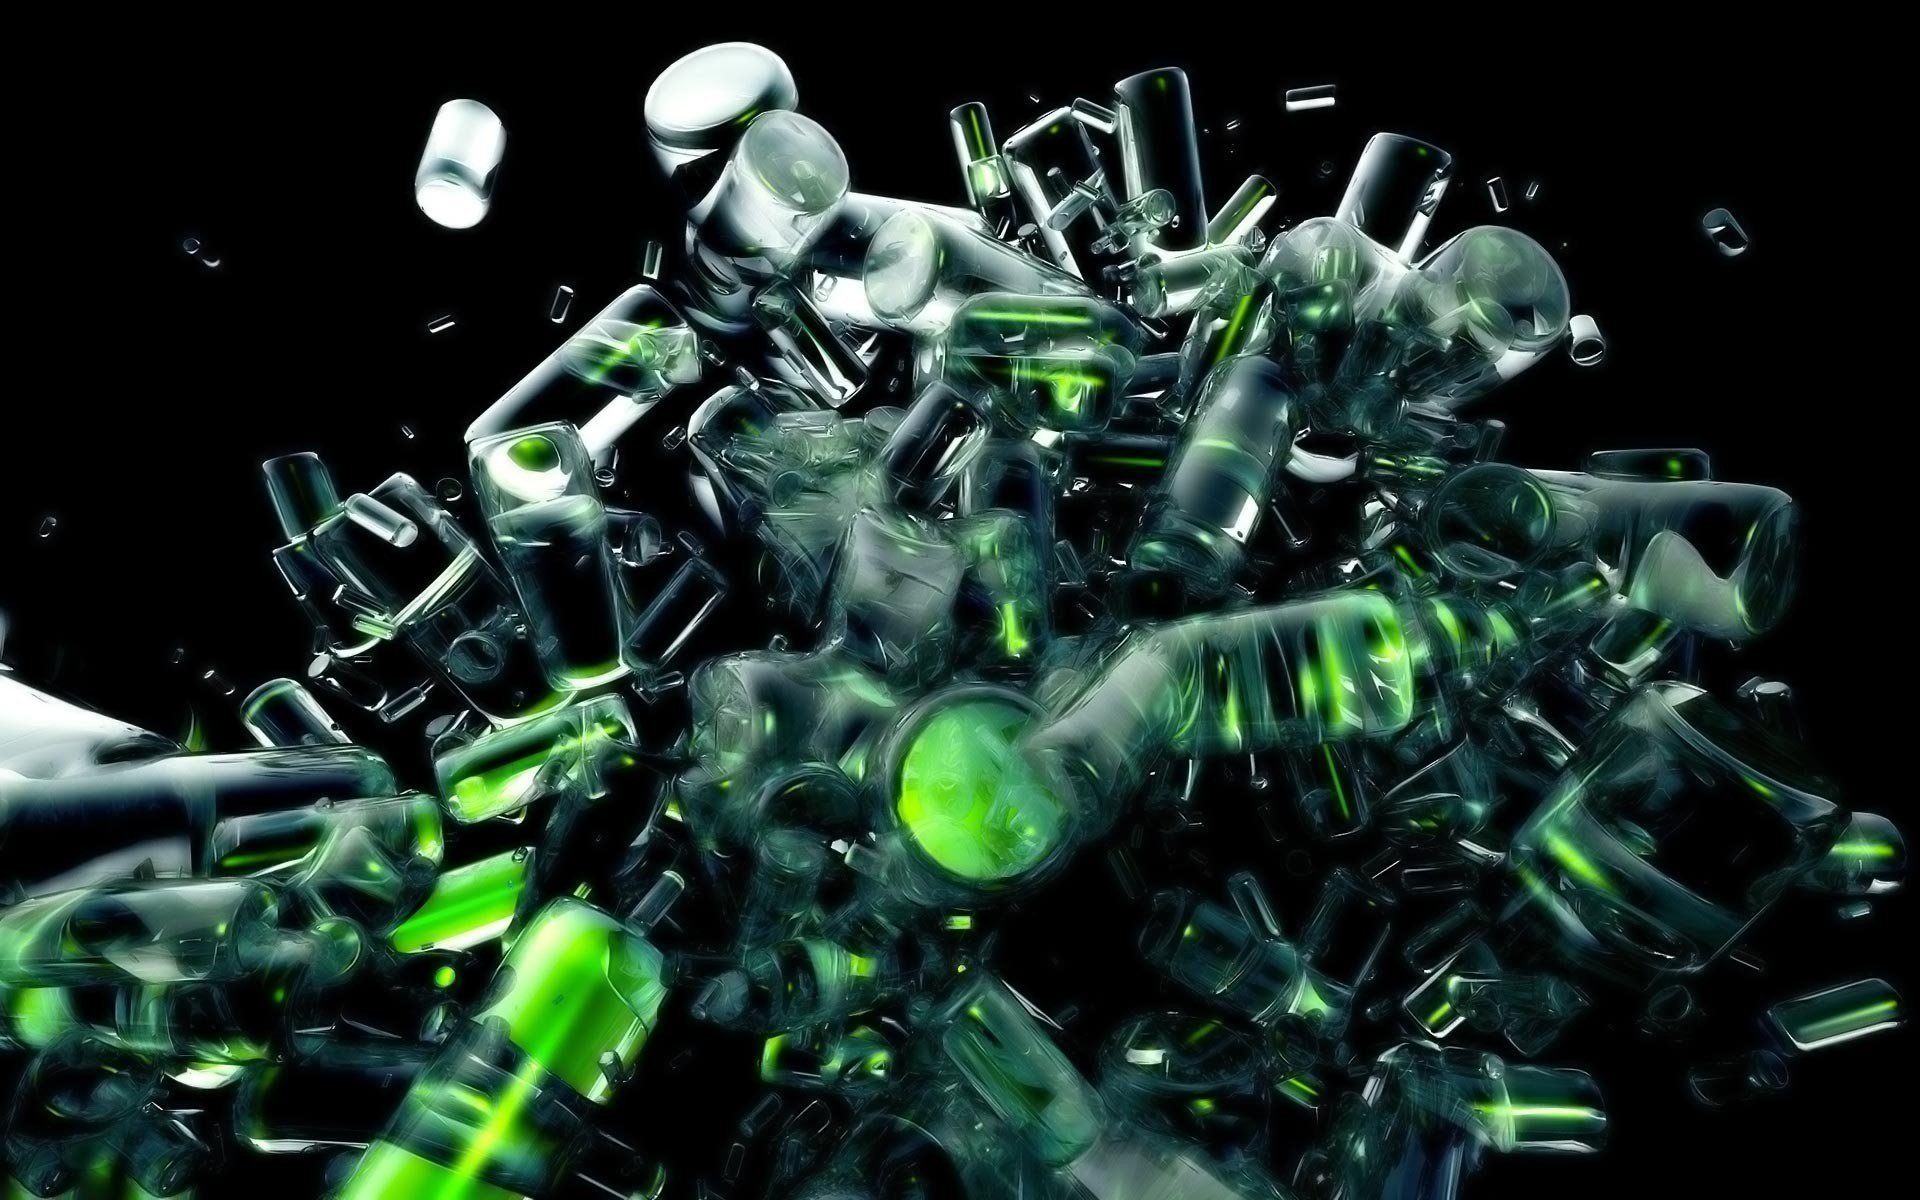 General 1920x1200 digital art black background glass bottles green reflection blurred CGI abstract dark